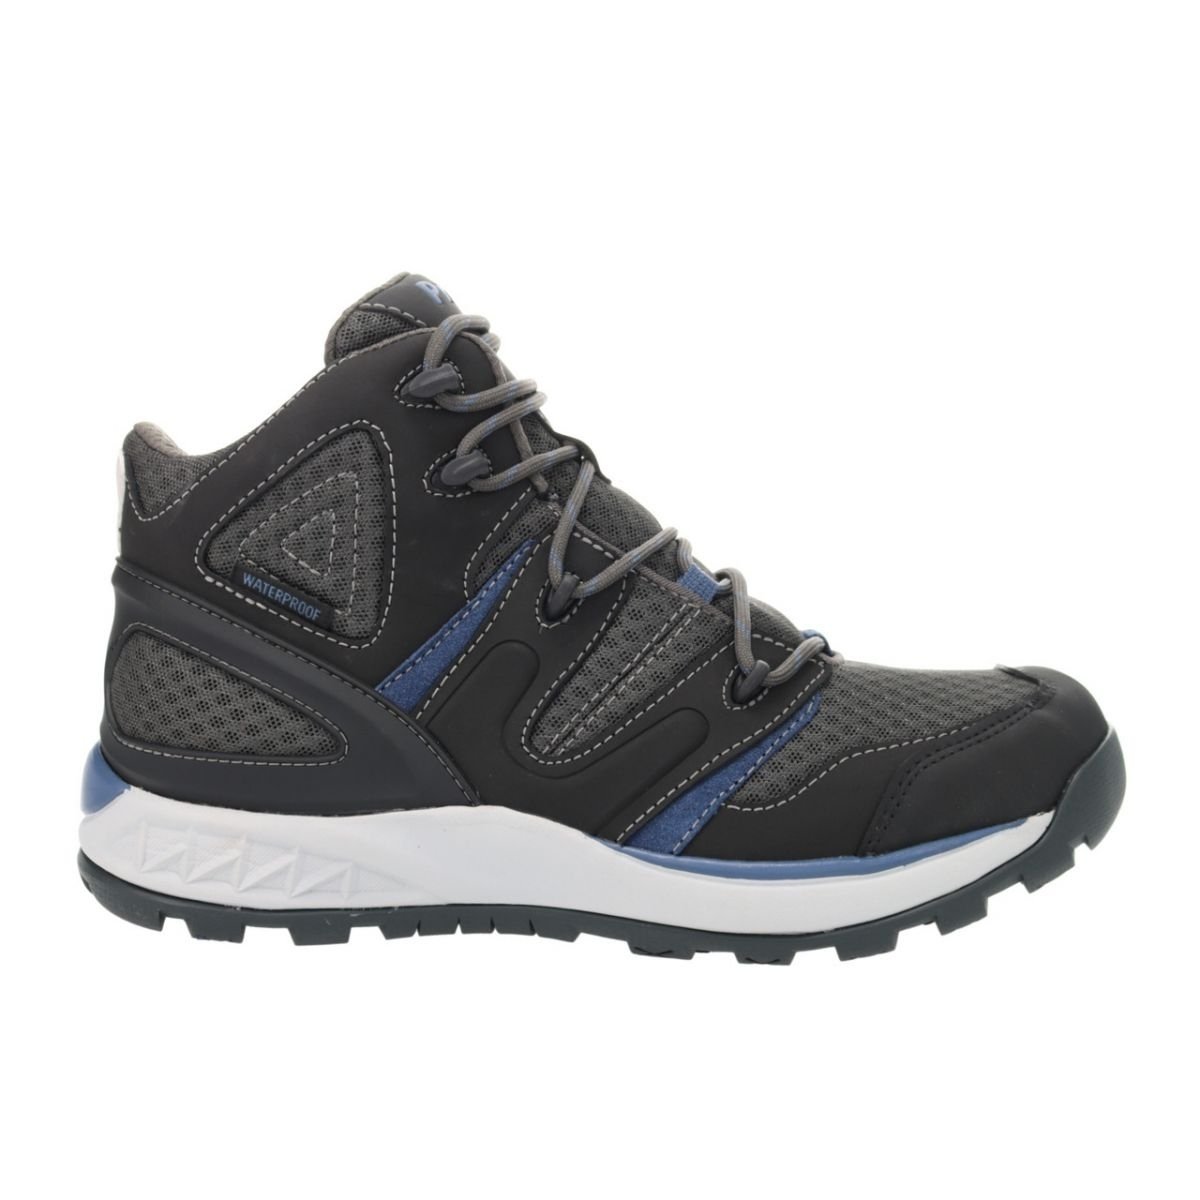 Propet Men's Veymont Waterproof Hiking Boot Grey/Blue - MOA022SGRB GREY/BLUE - GREY/BLUE, 16 X-Wide